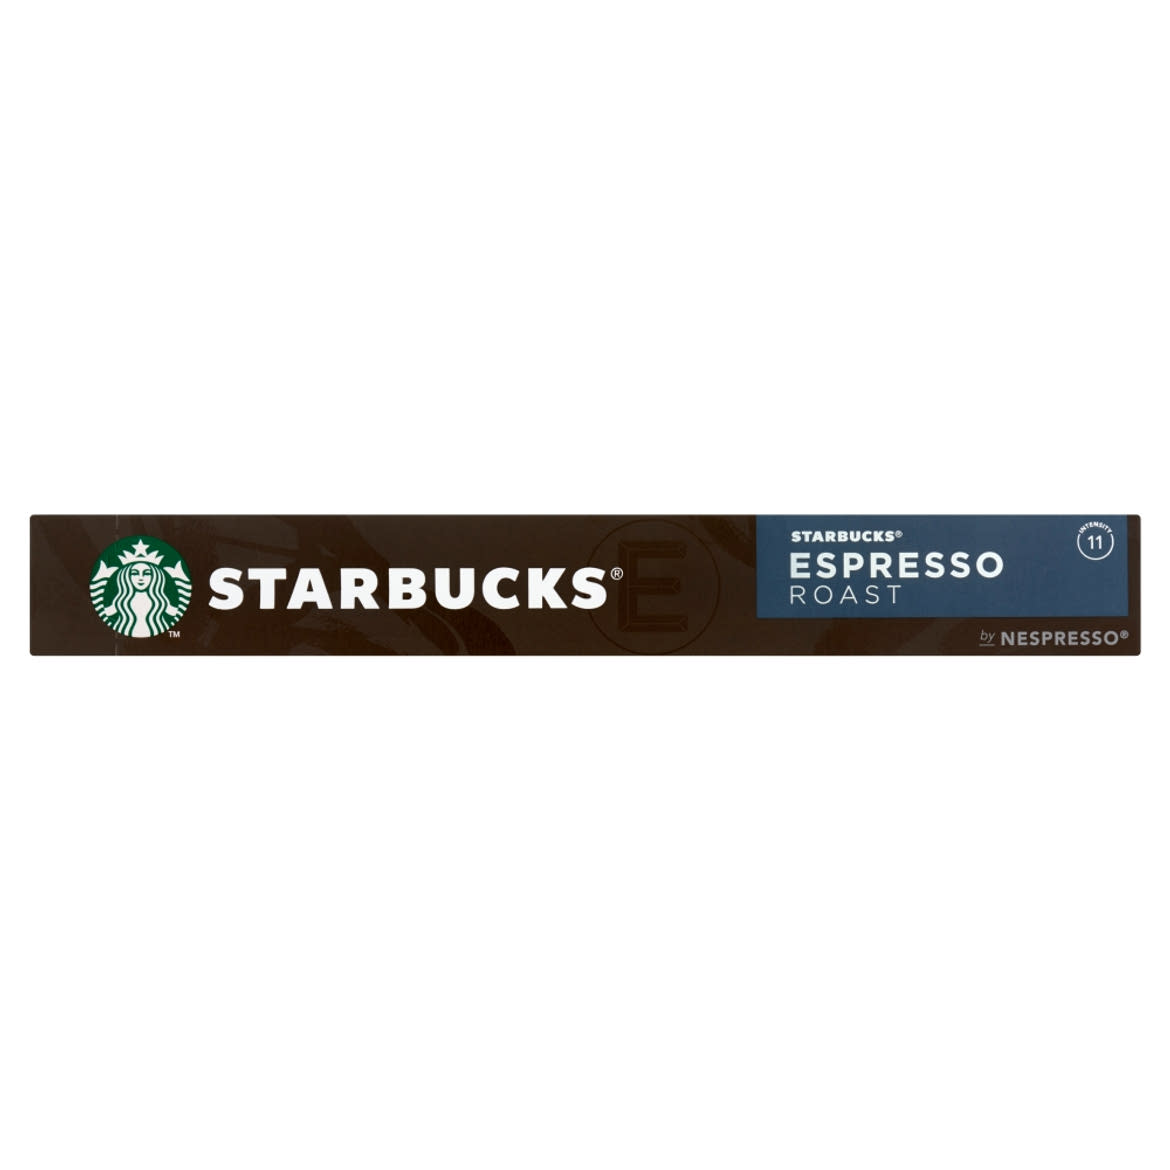 Starbucks by Nespresso Espresso Roast őrölt, pörkölt kávé kapszula